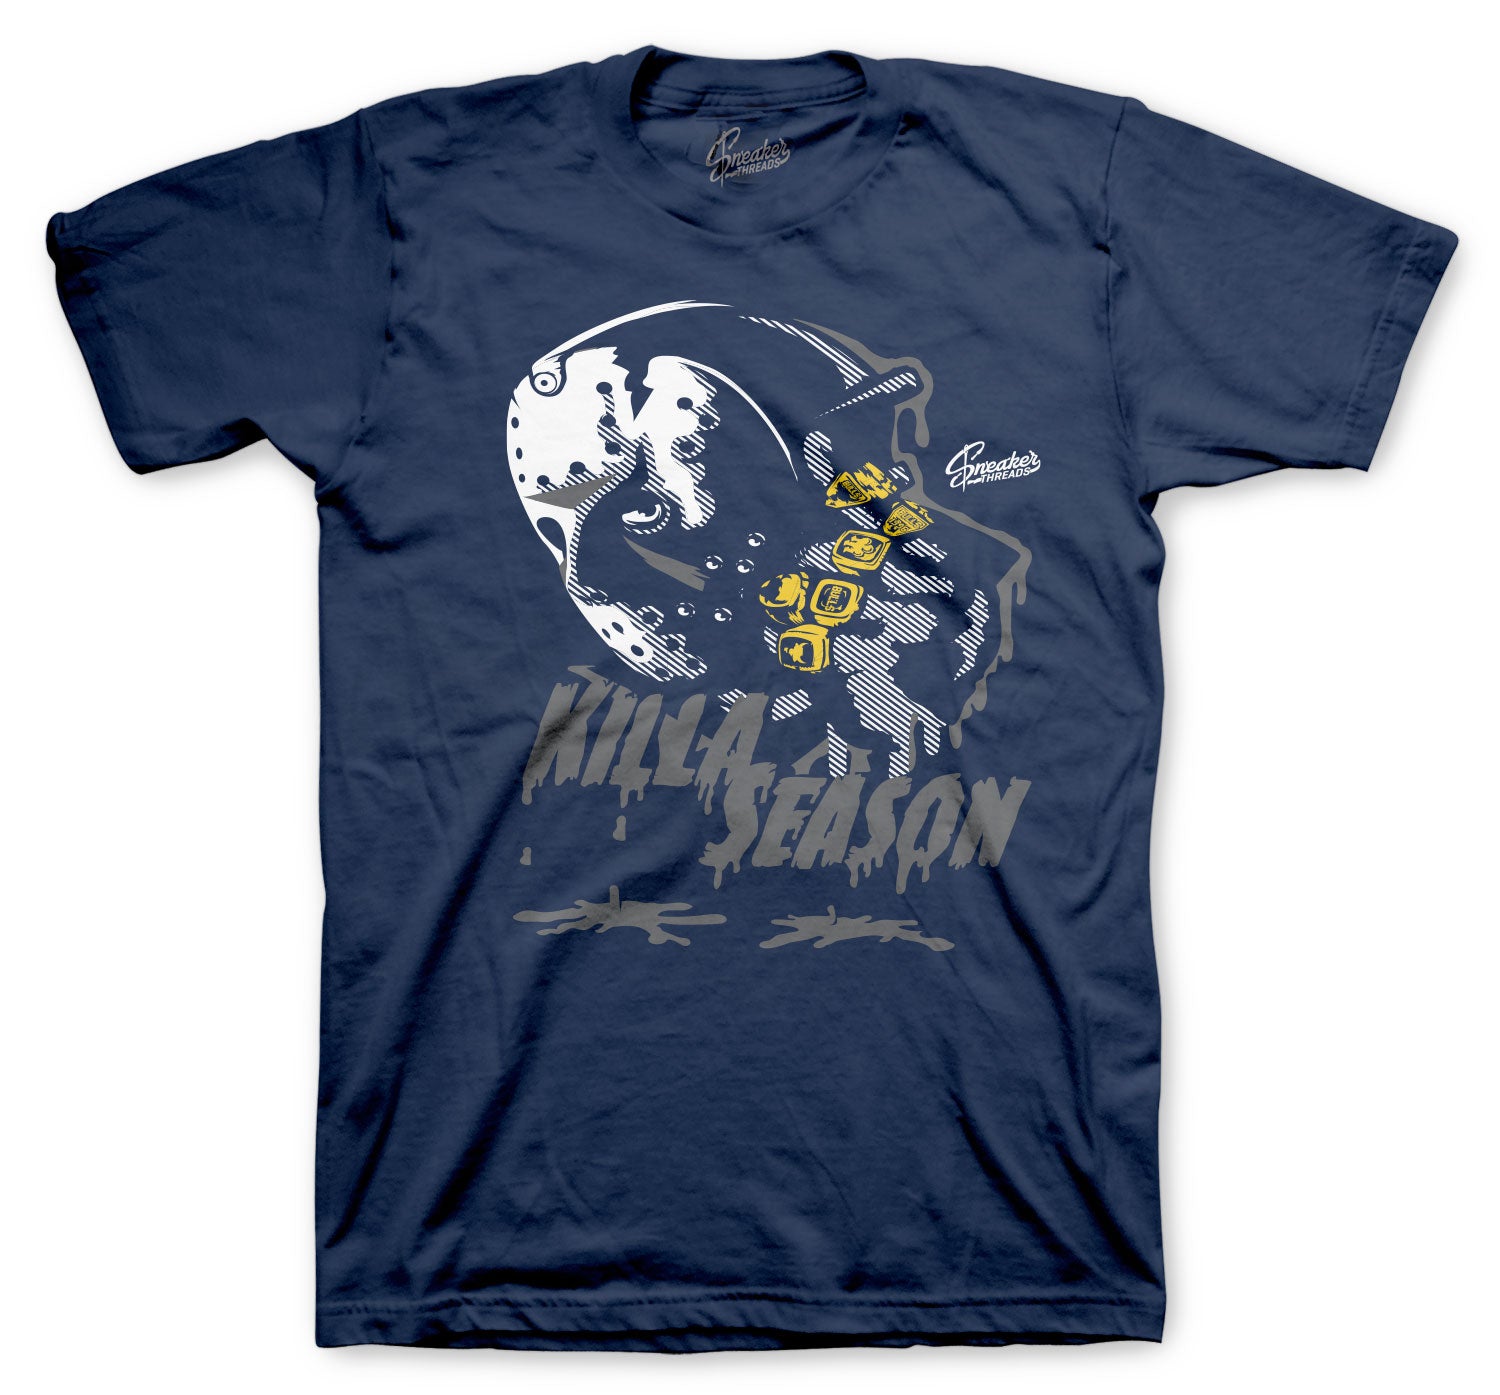 Retro 13 Flint Shirt - Killa Season - Navy